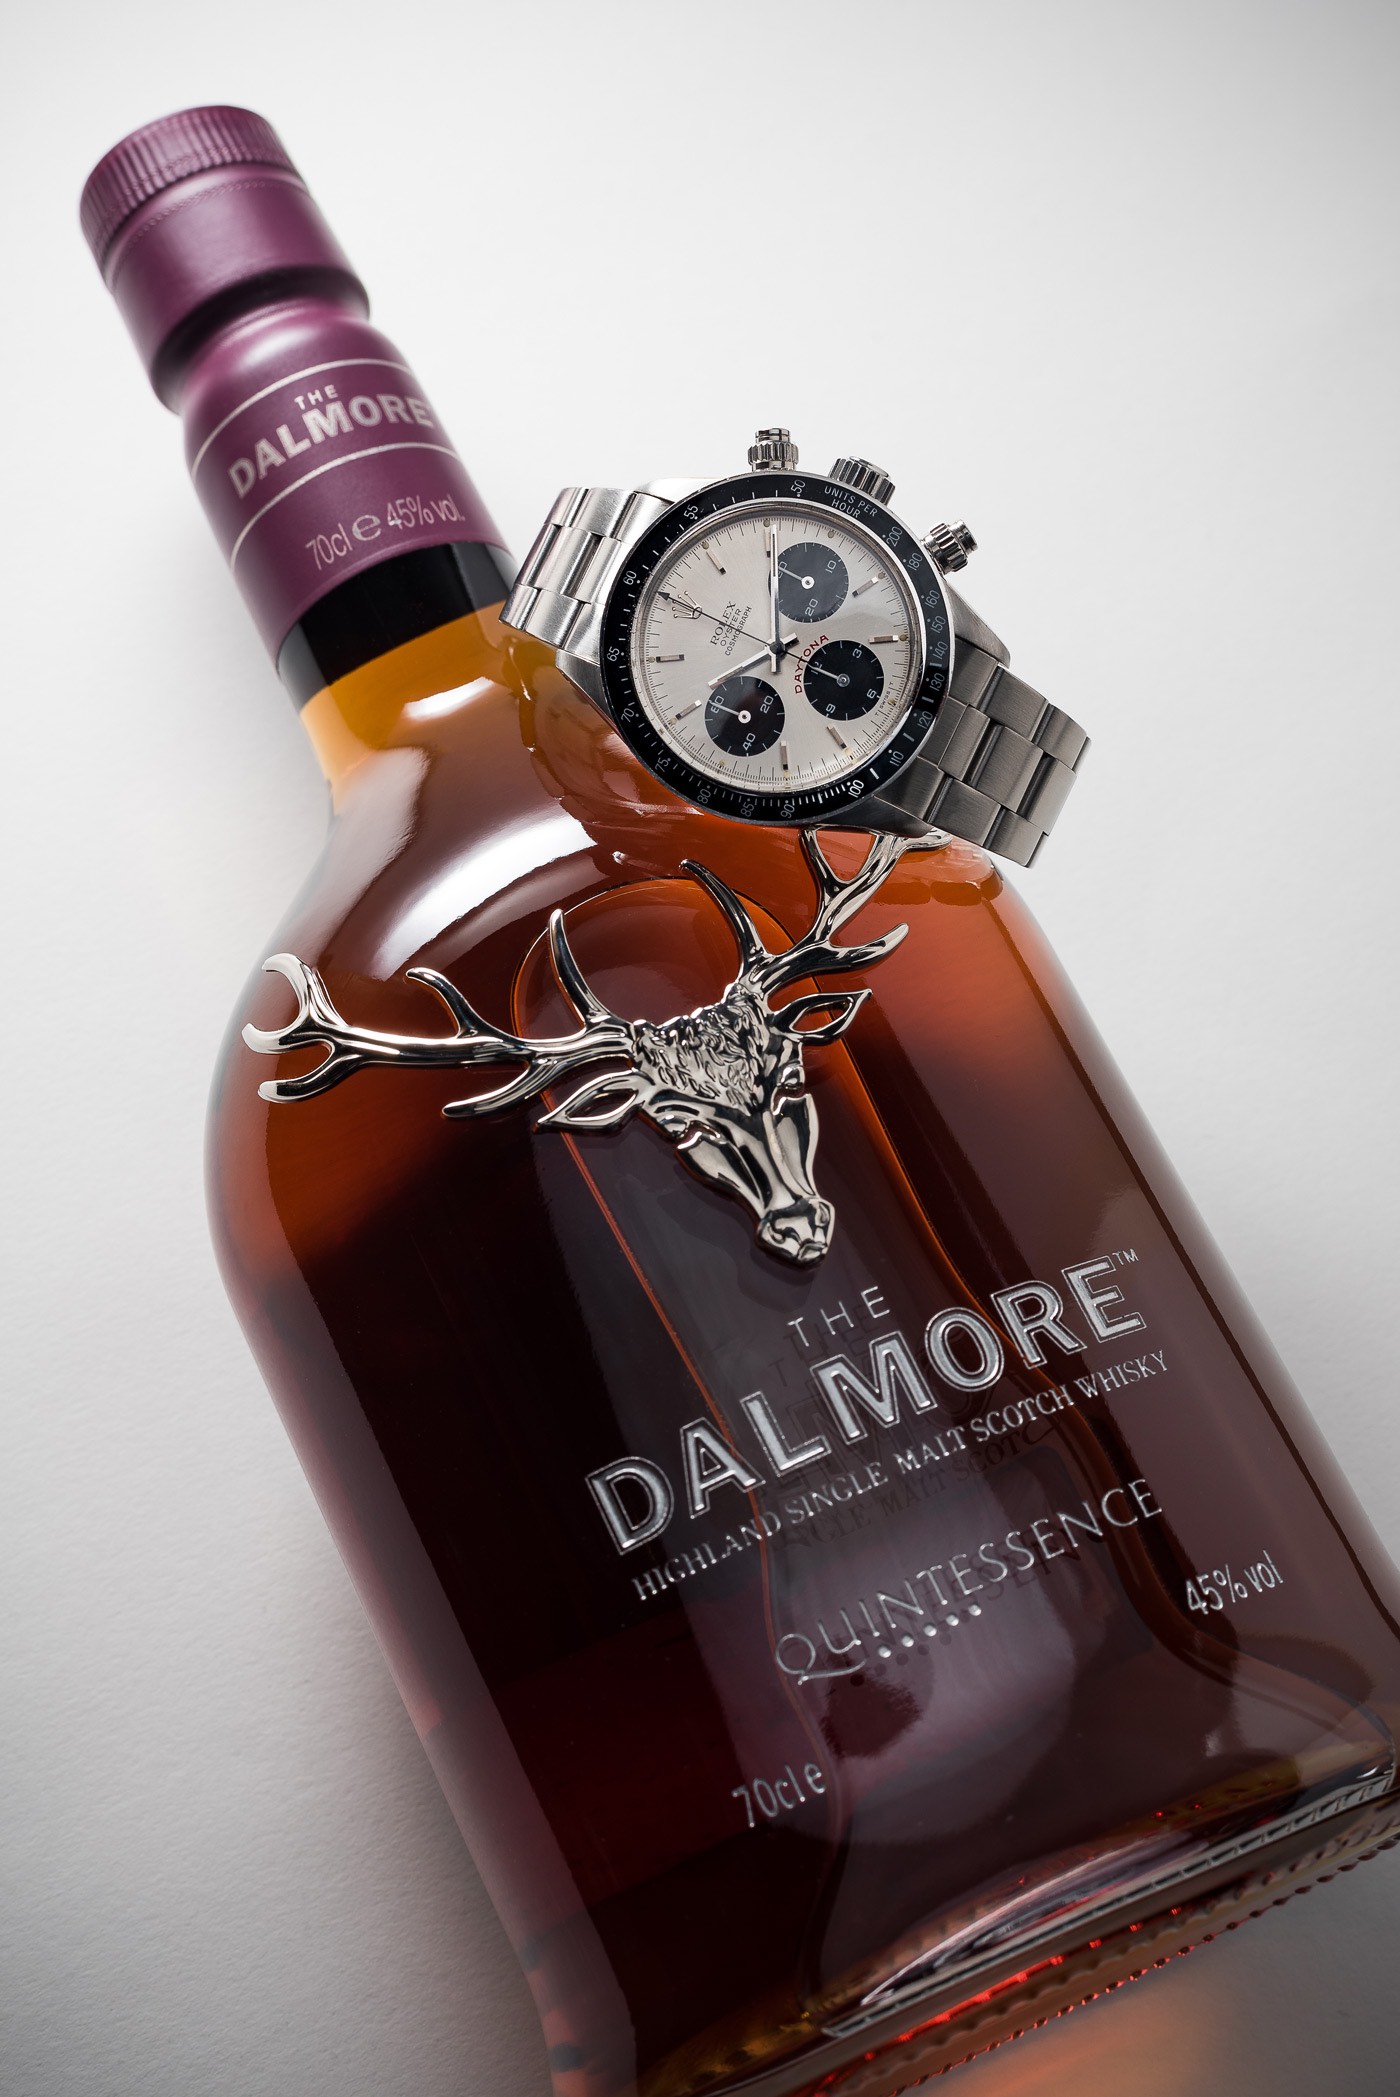 W&W: Dalmore Quintessence + Rolex Daytona